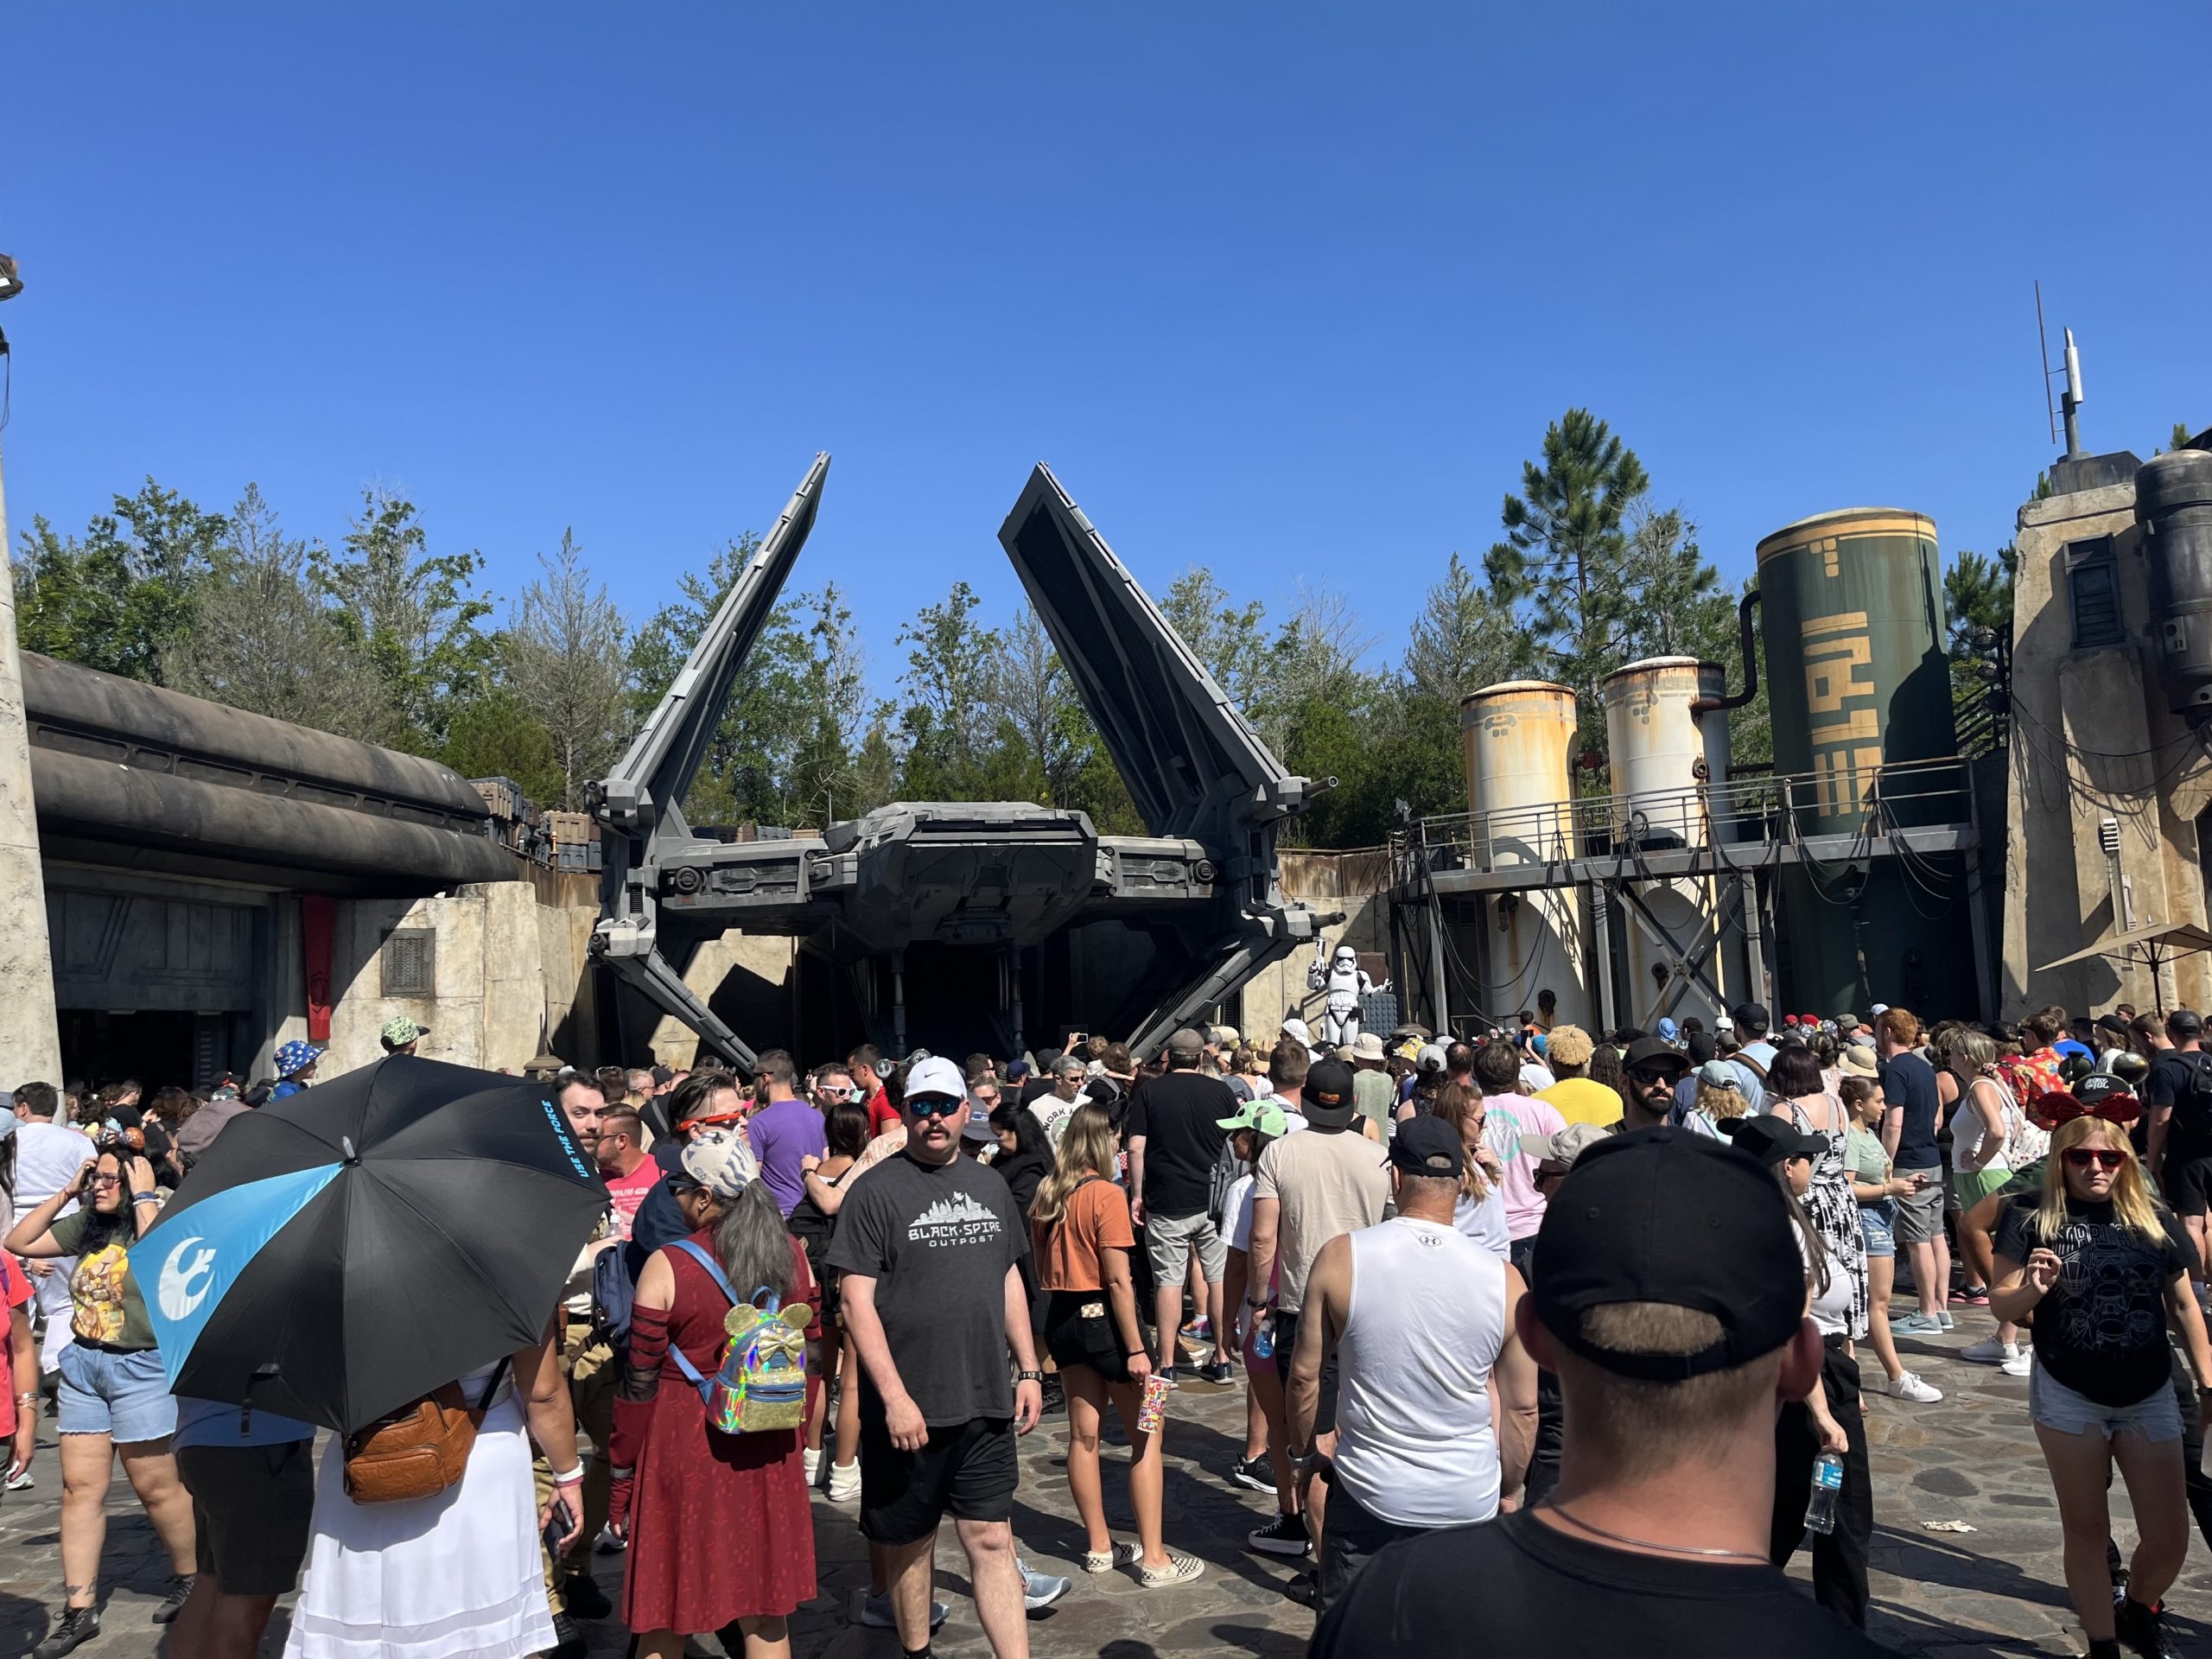 Crowds in Galaxy's Edge on Star Wars Day